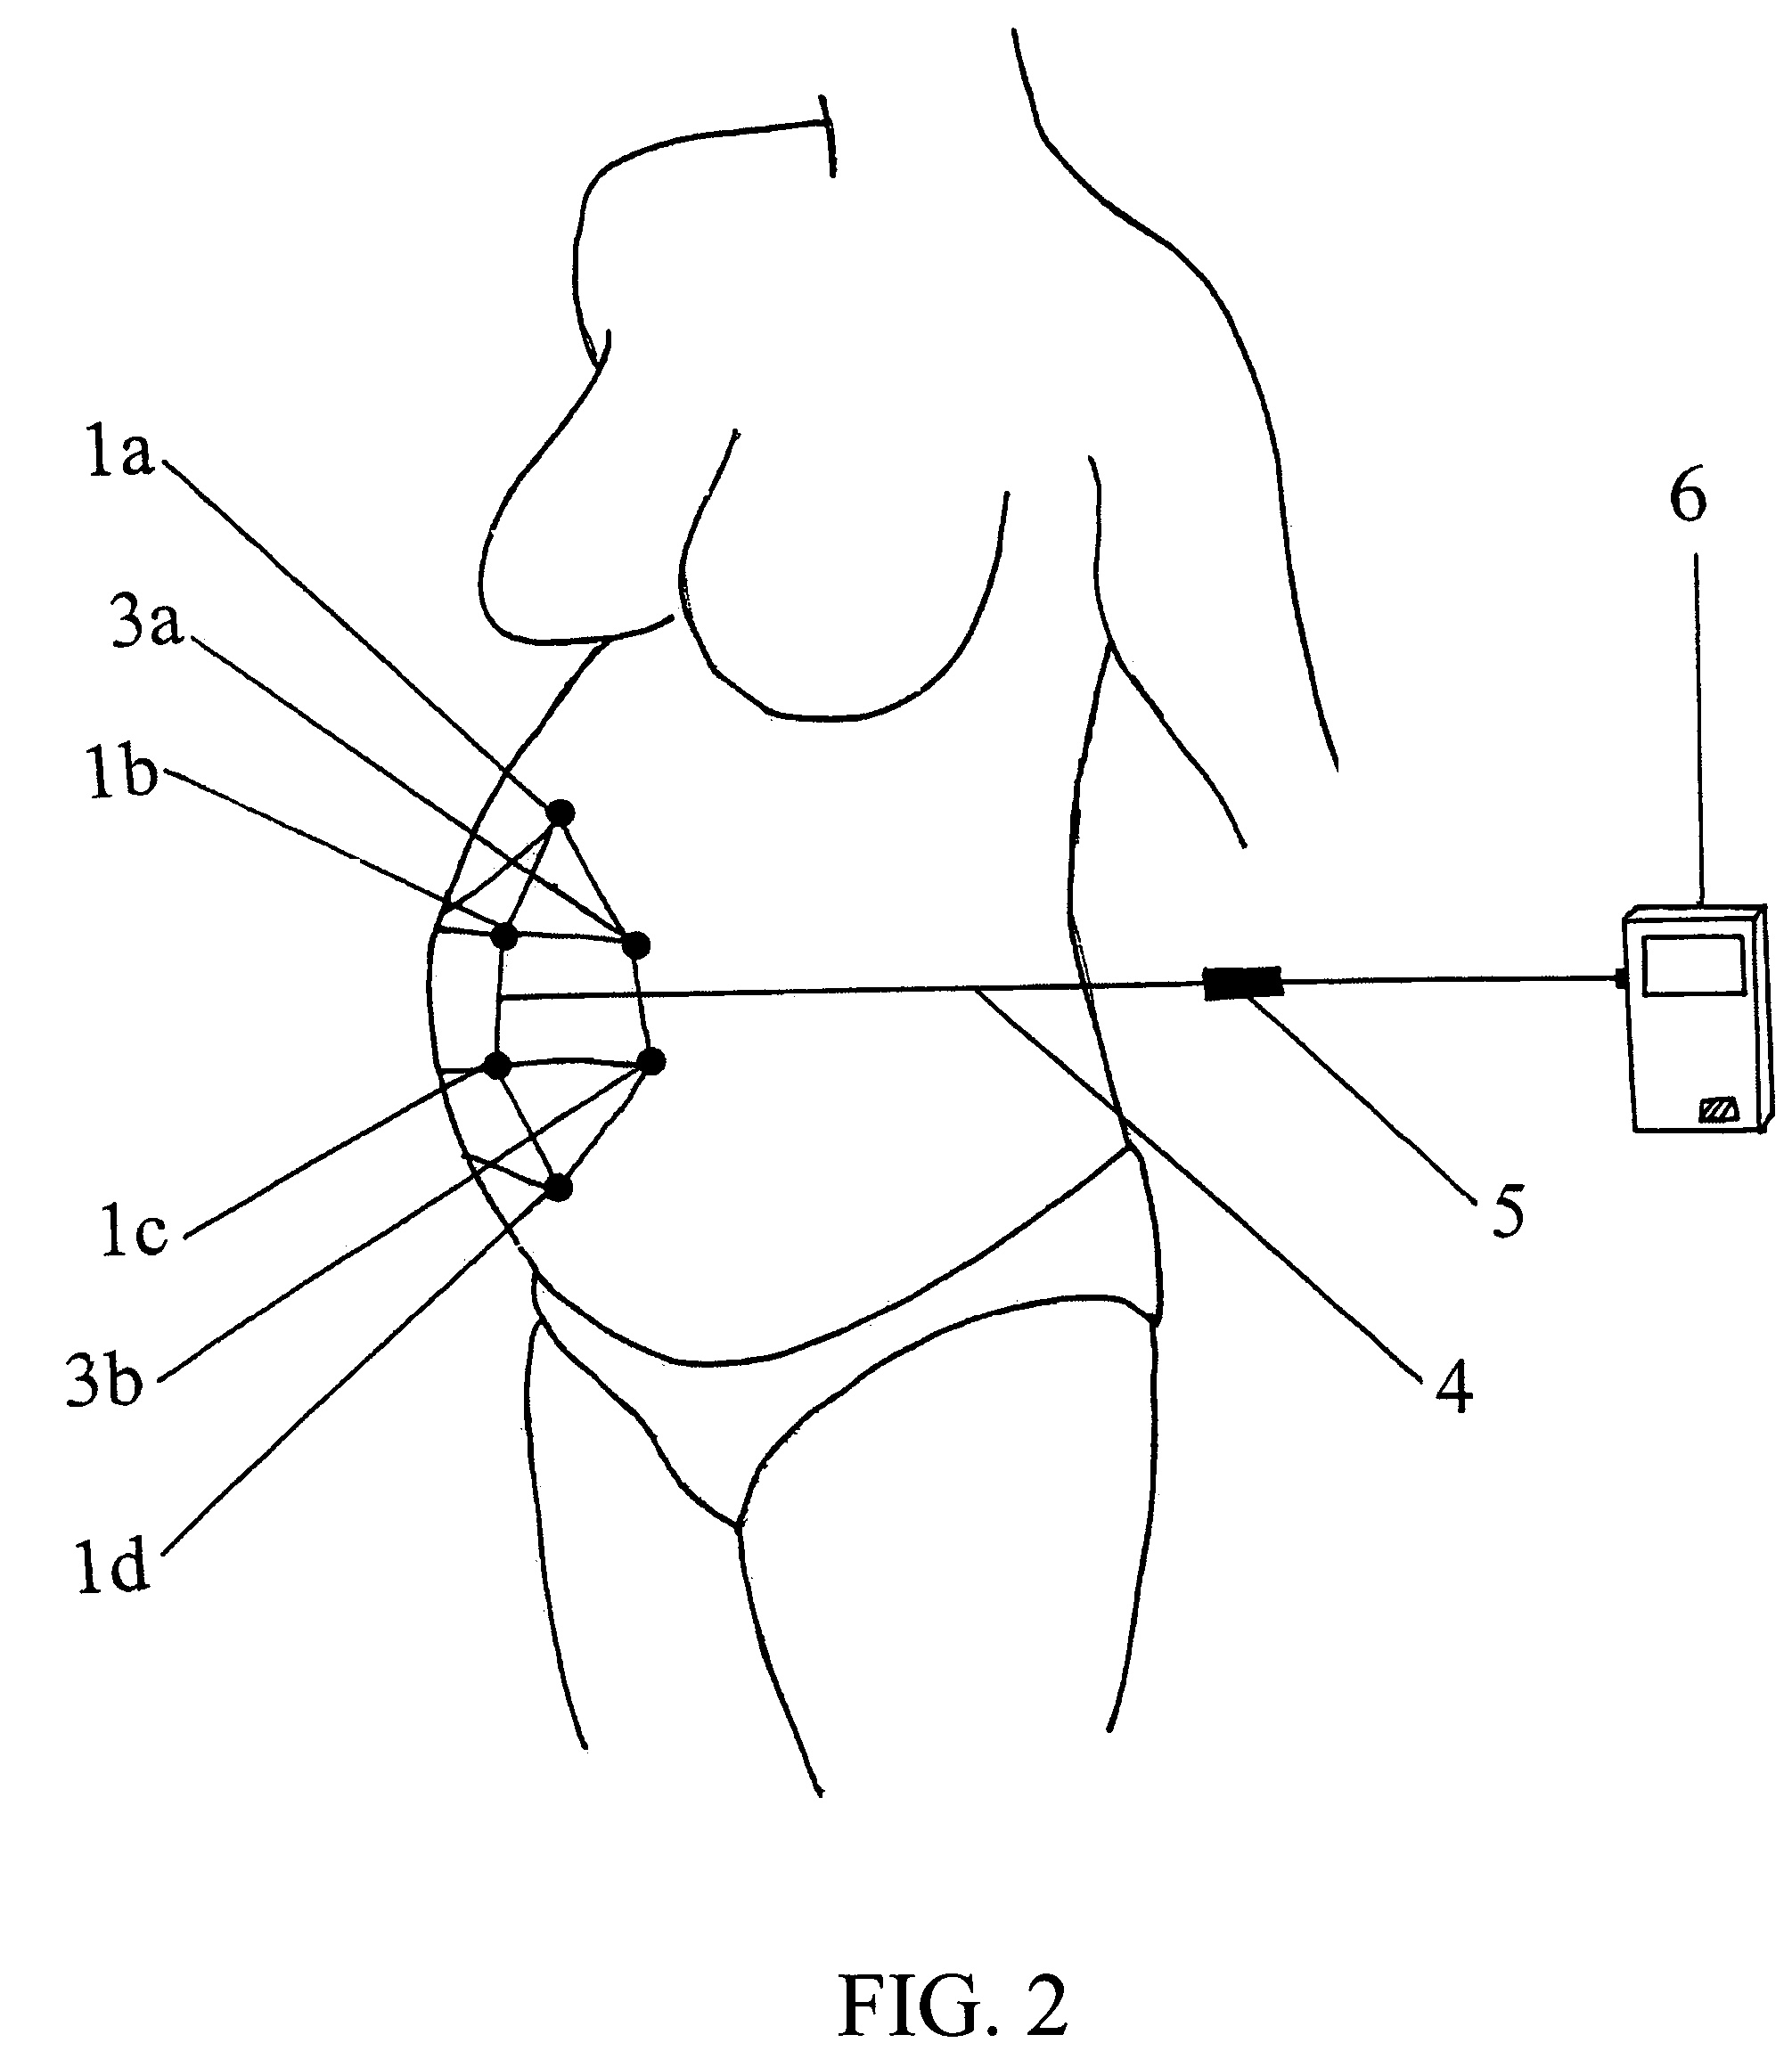 Maternal-fetal monitoring system